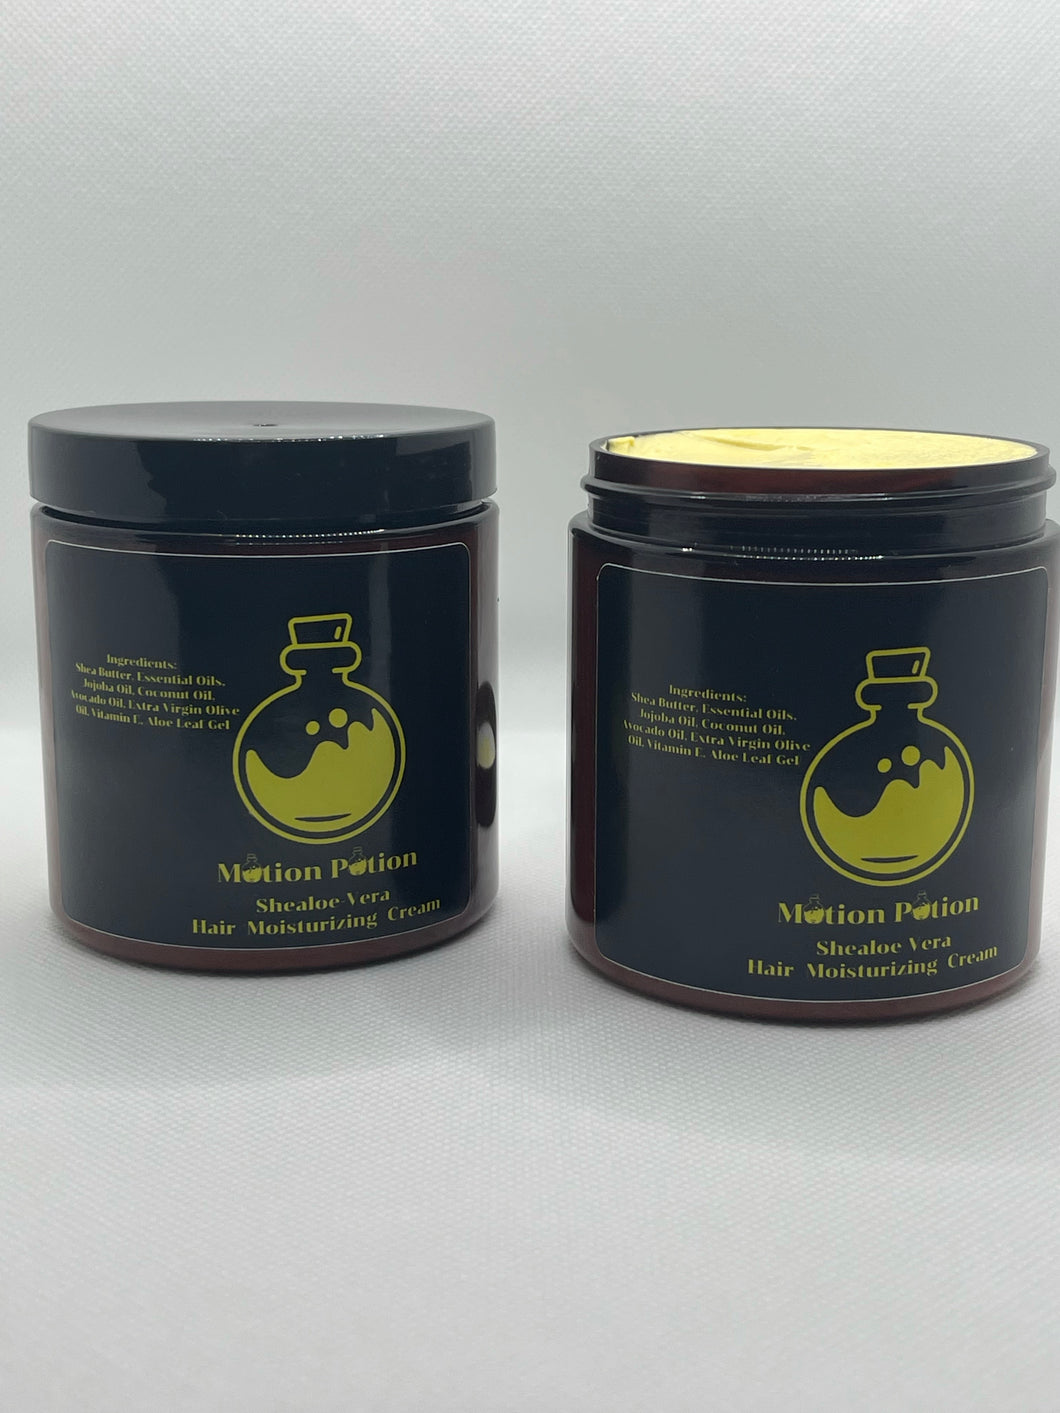 Shealoe-Vera Hair Moisturizing Cream (8 oz containers)